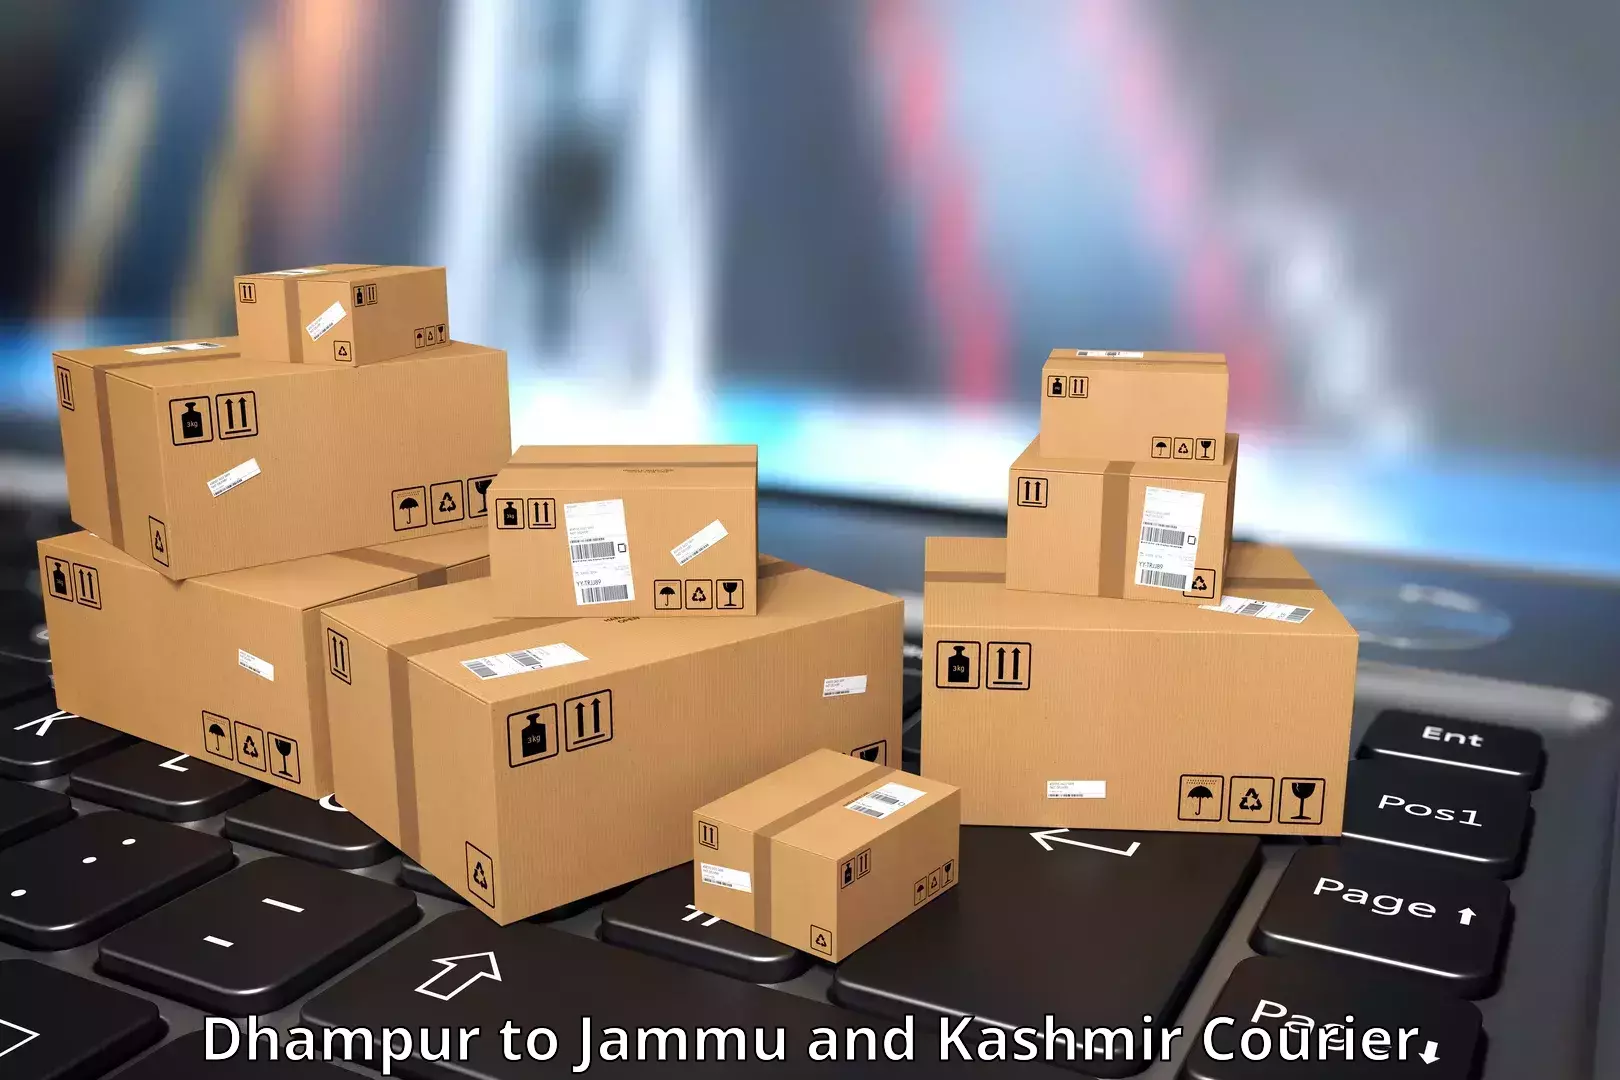 Global courier networks Dhampur to Srinagar Kashmir